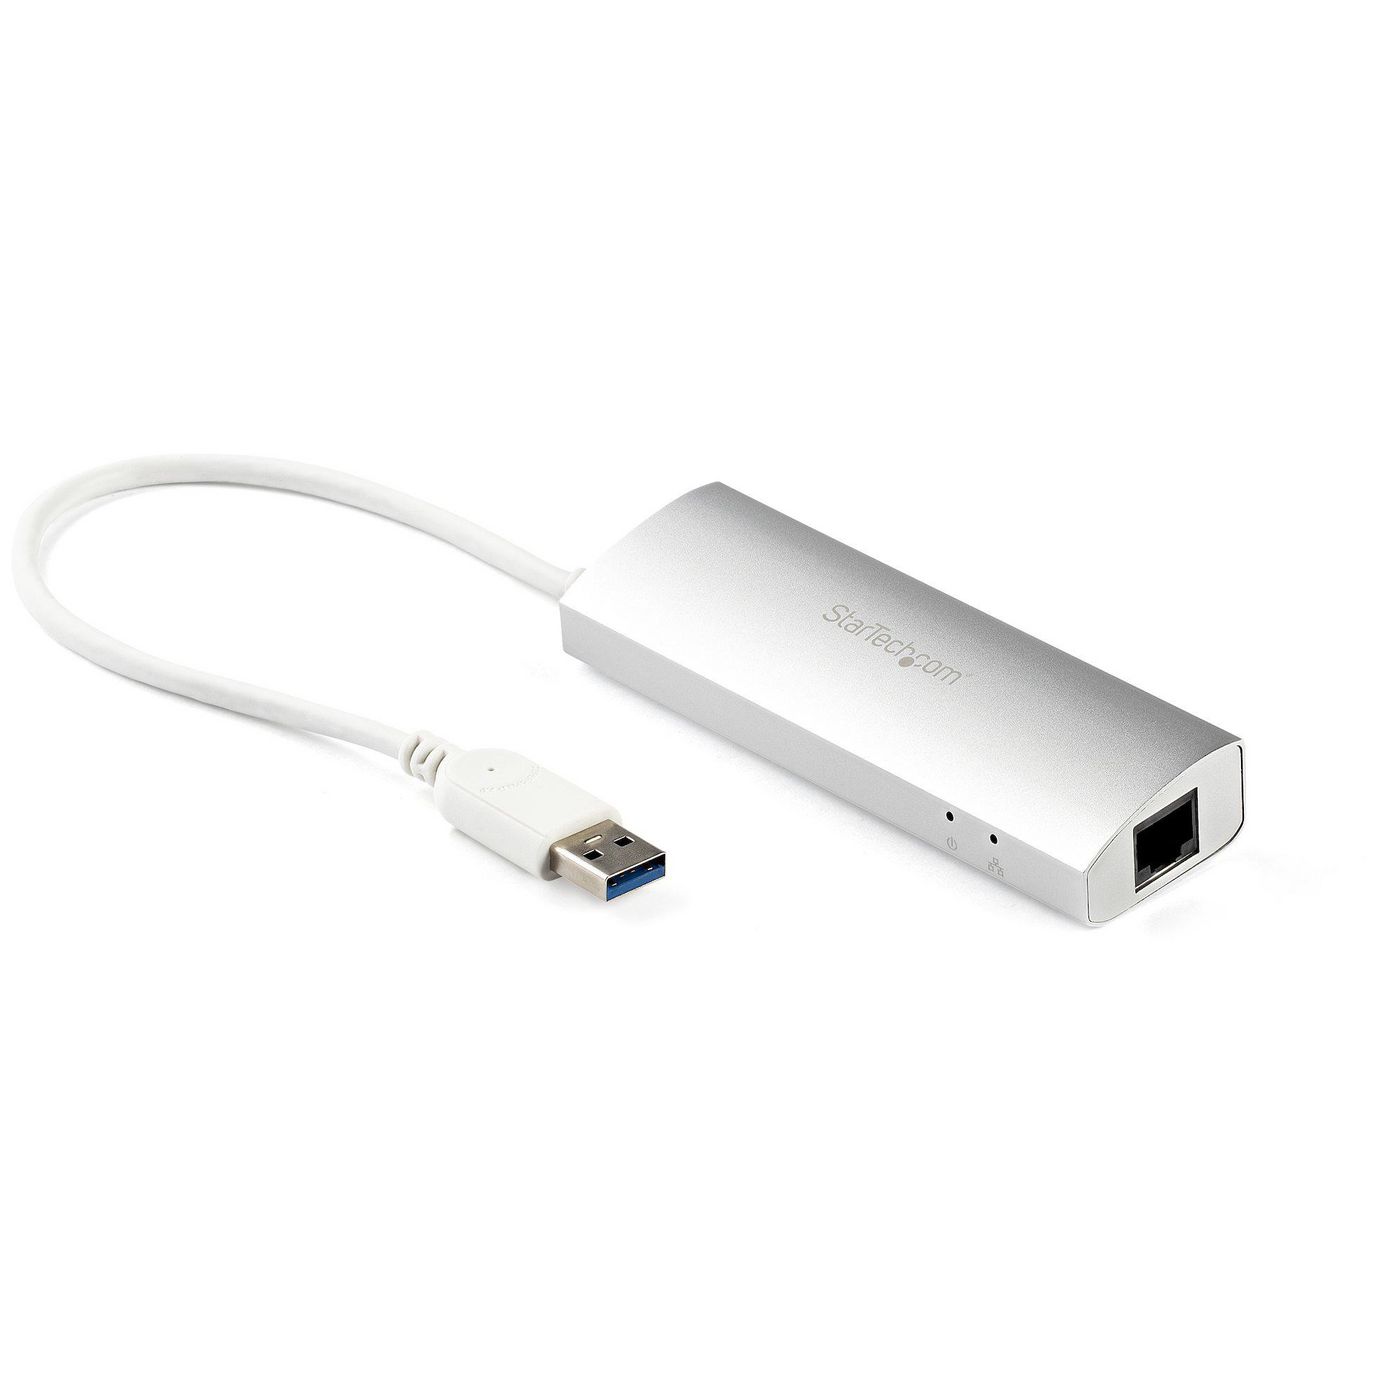 StarTechcom ST3300G3UA 3PT PORTABLE USB 3.0 HUB + GBE 